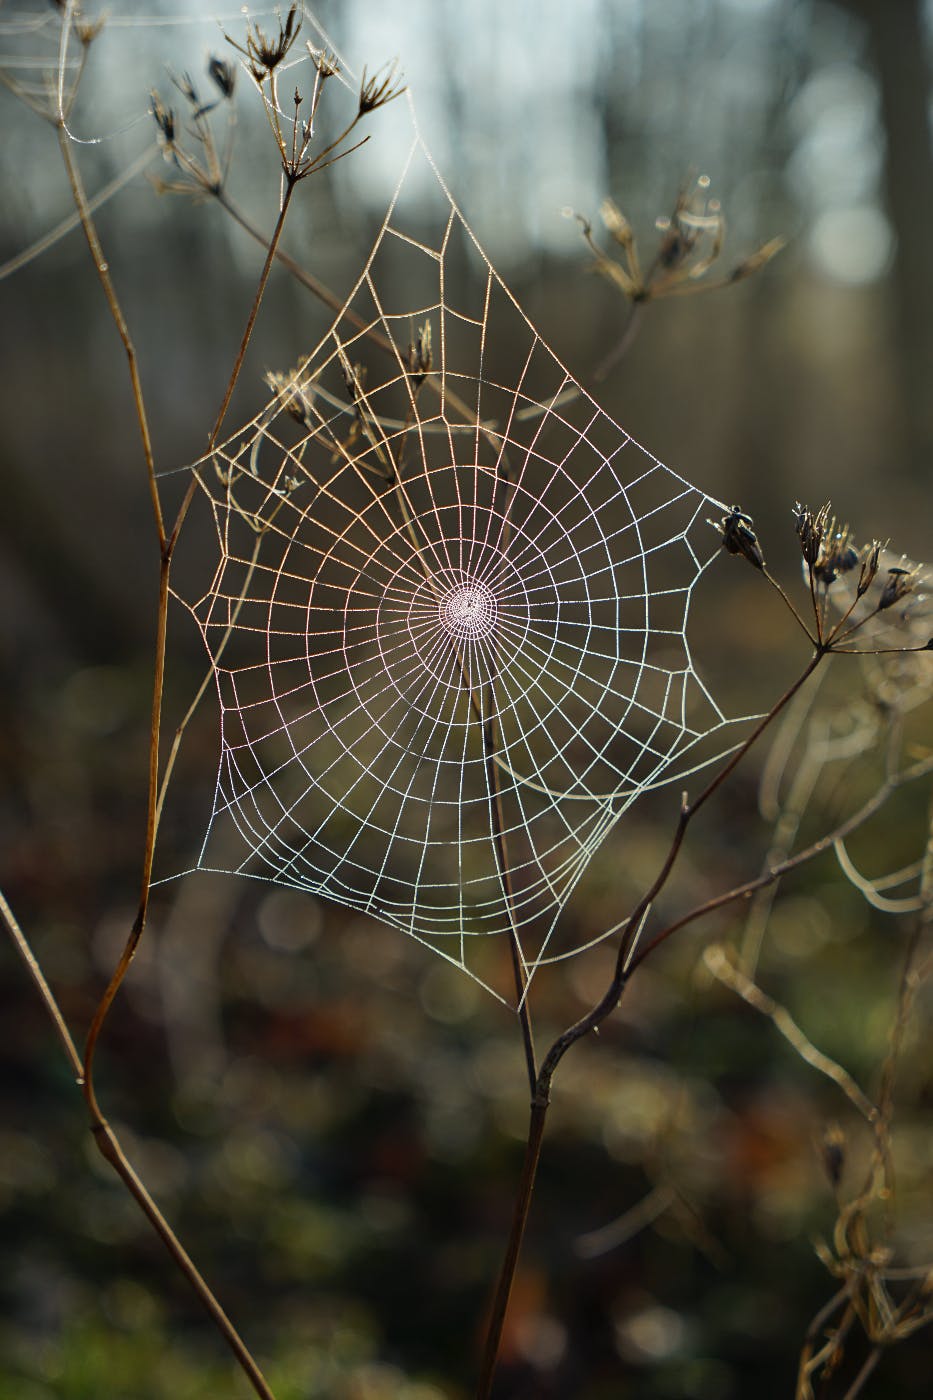 A spider's web strung between flower stems in a field